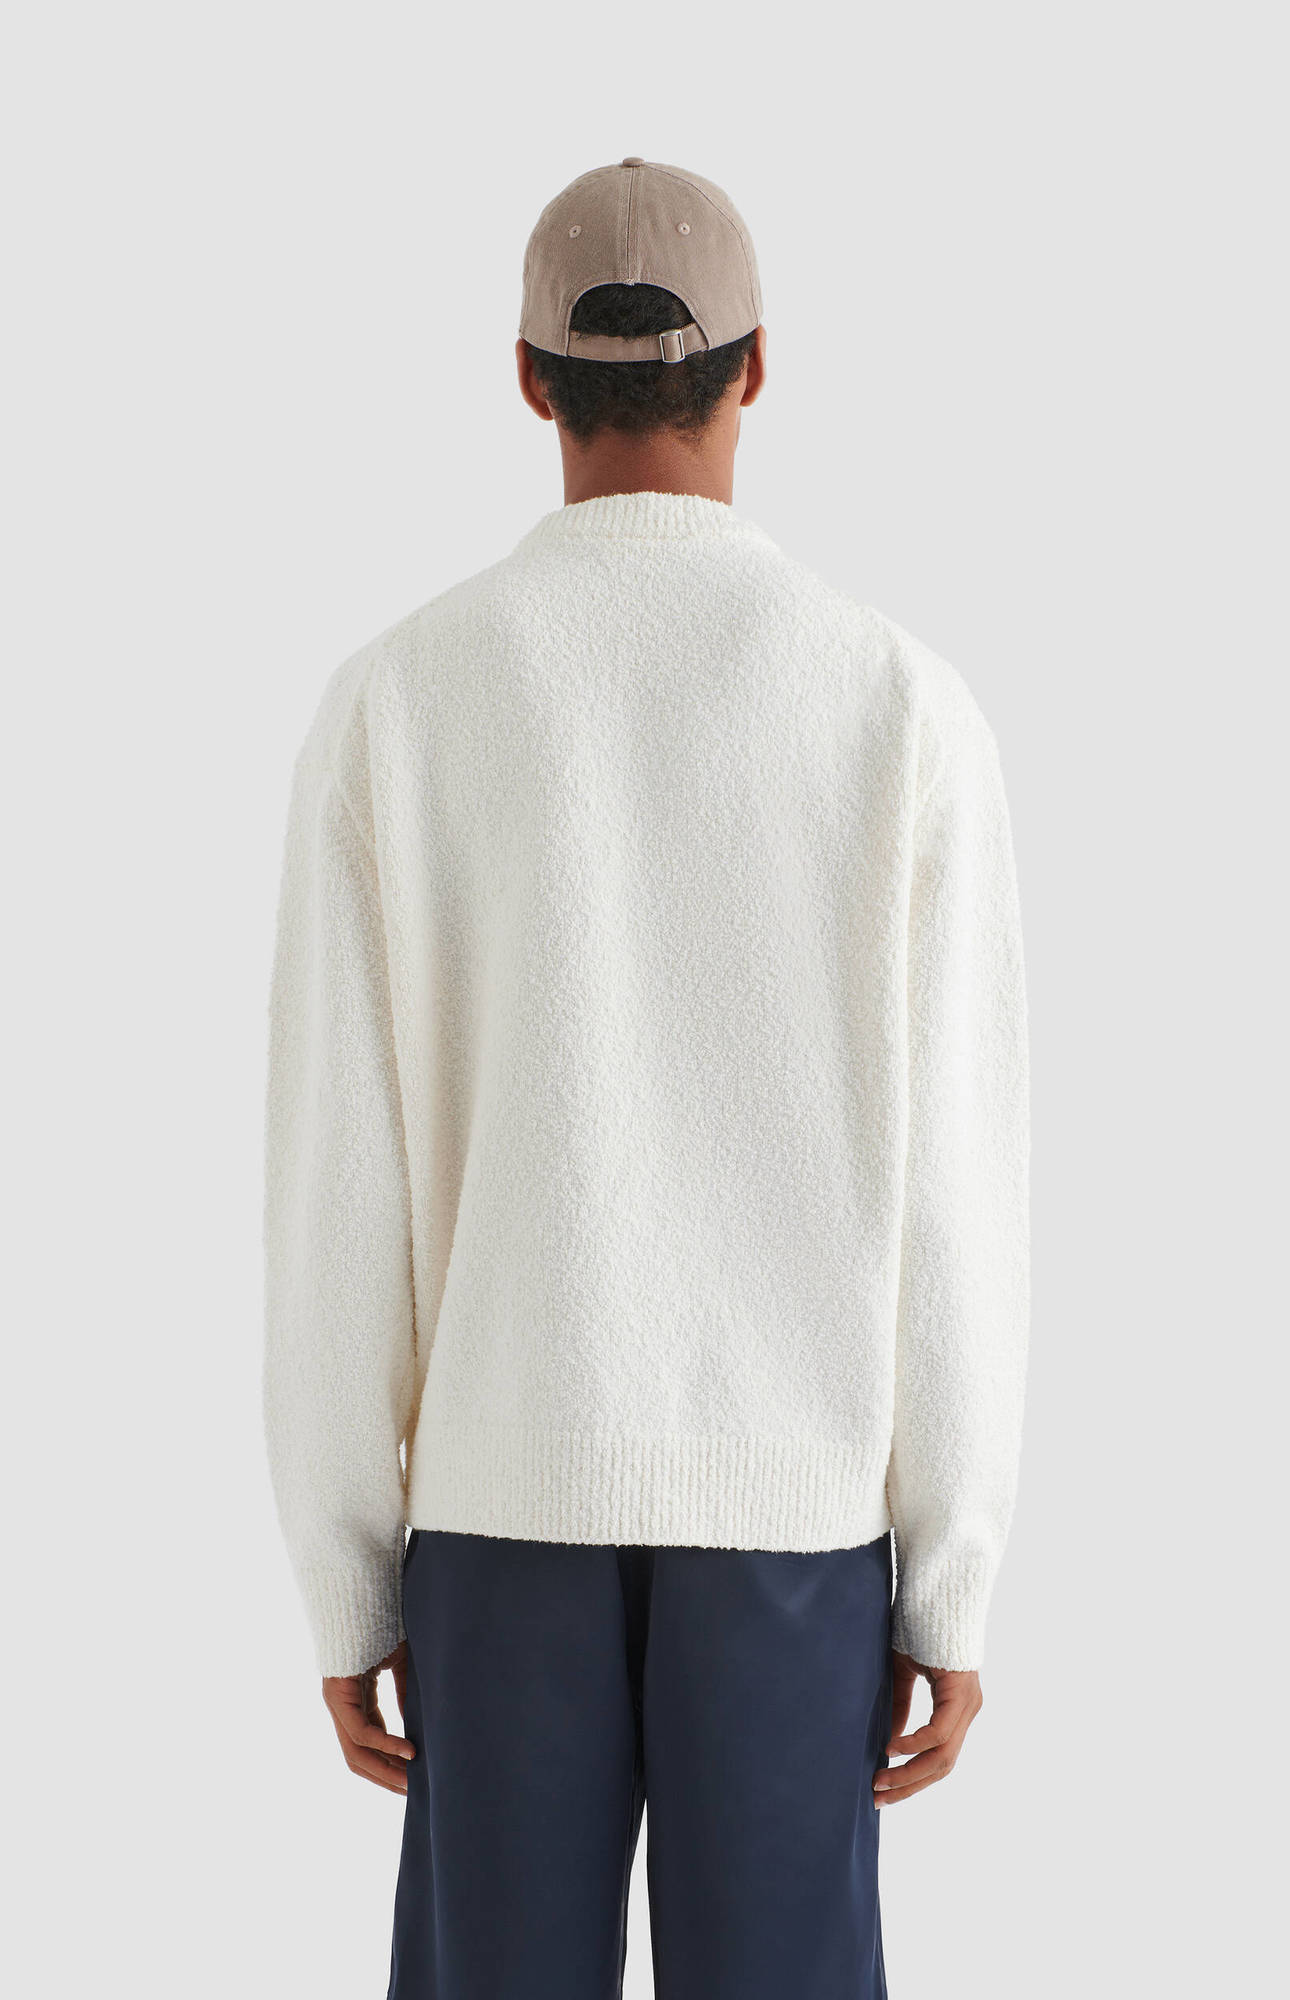 AXEL ARIGATO Radar Knit Sweater in Off White XL